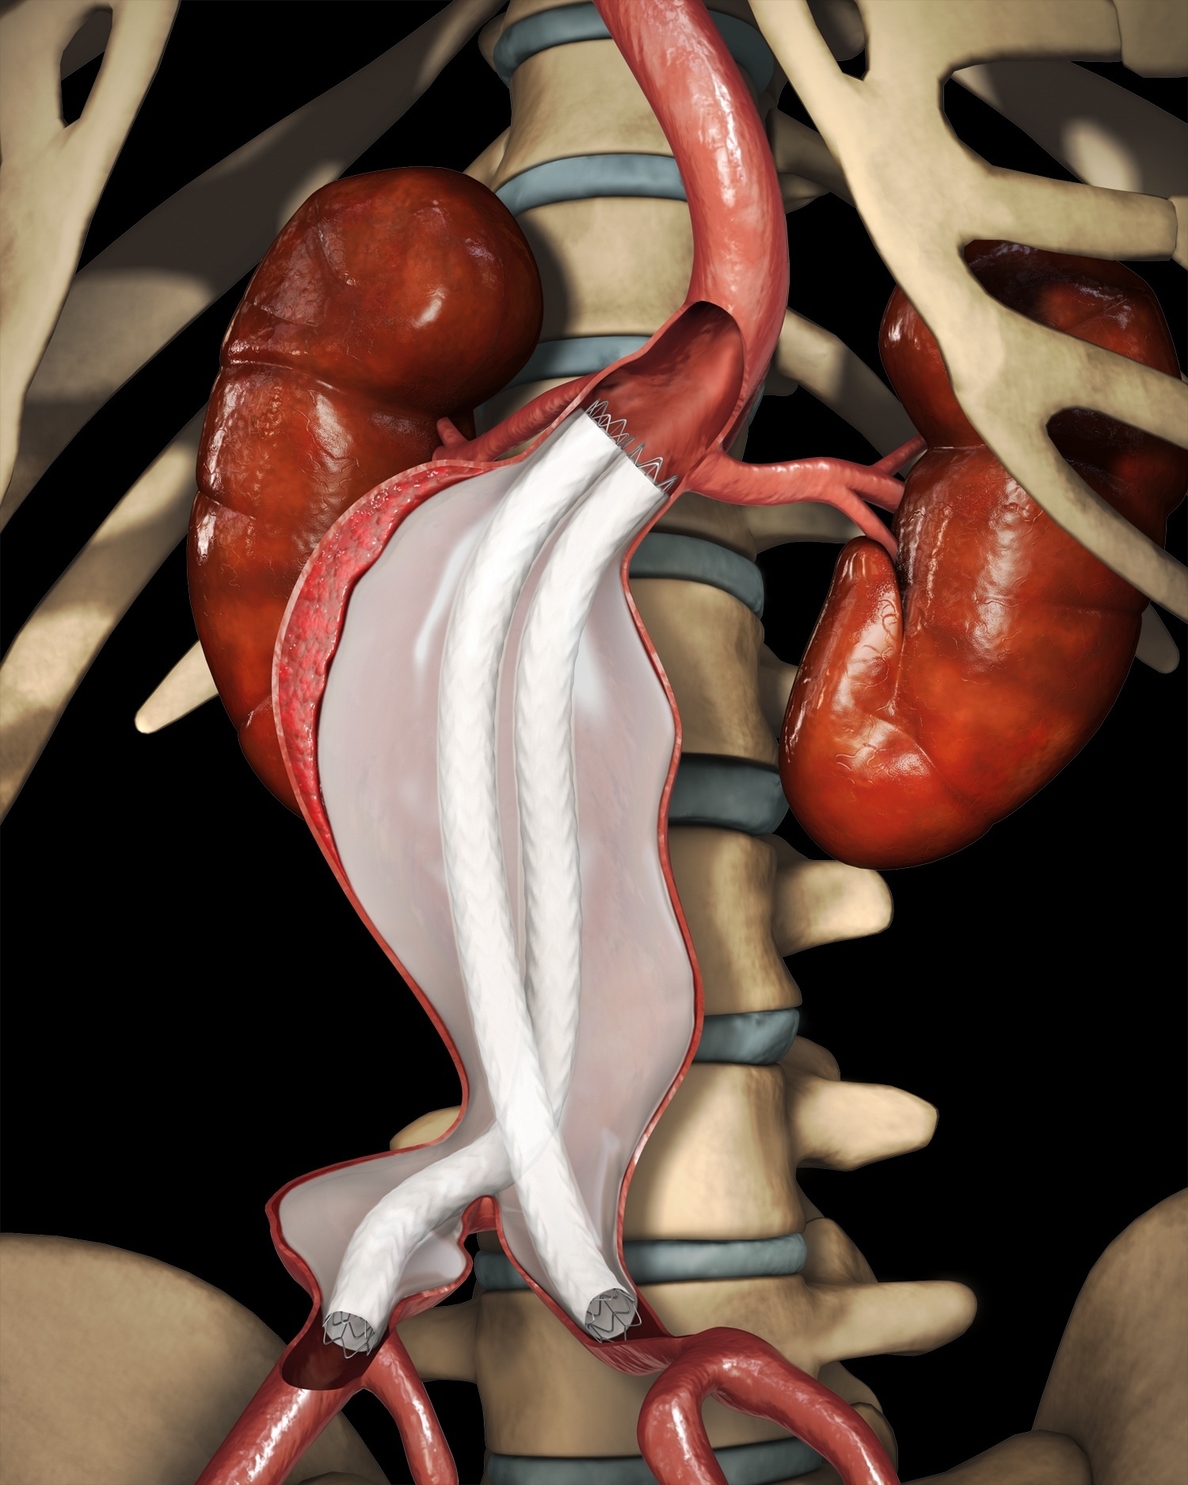 El Trueta de Girona implanta dos endroprótesis de última generación para tratar aneurismas de aorta